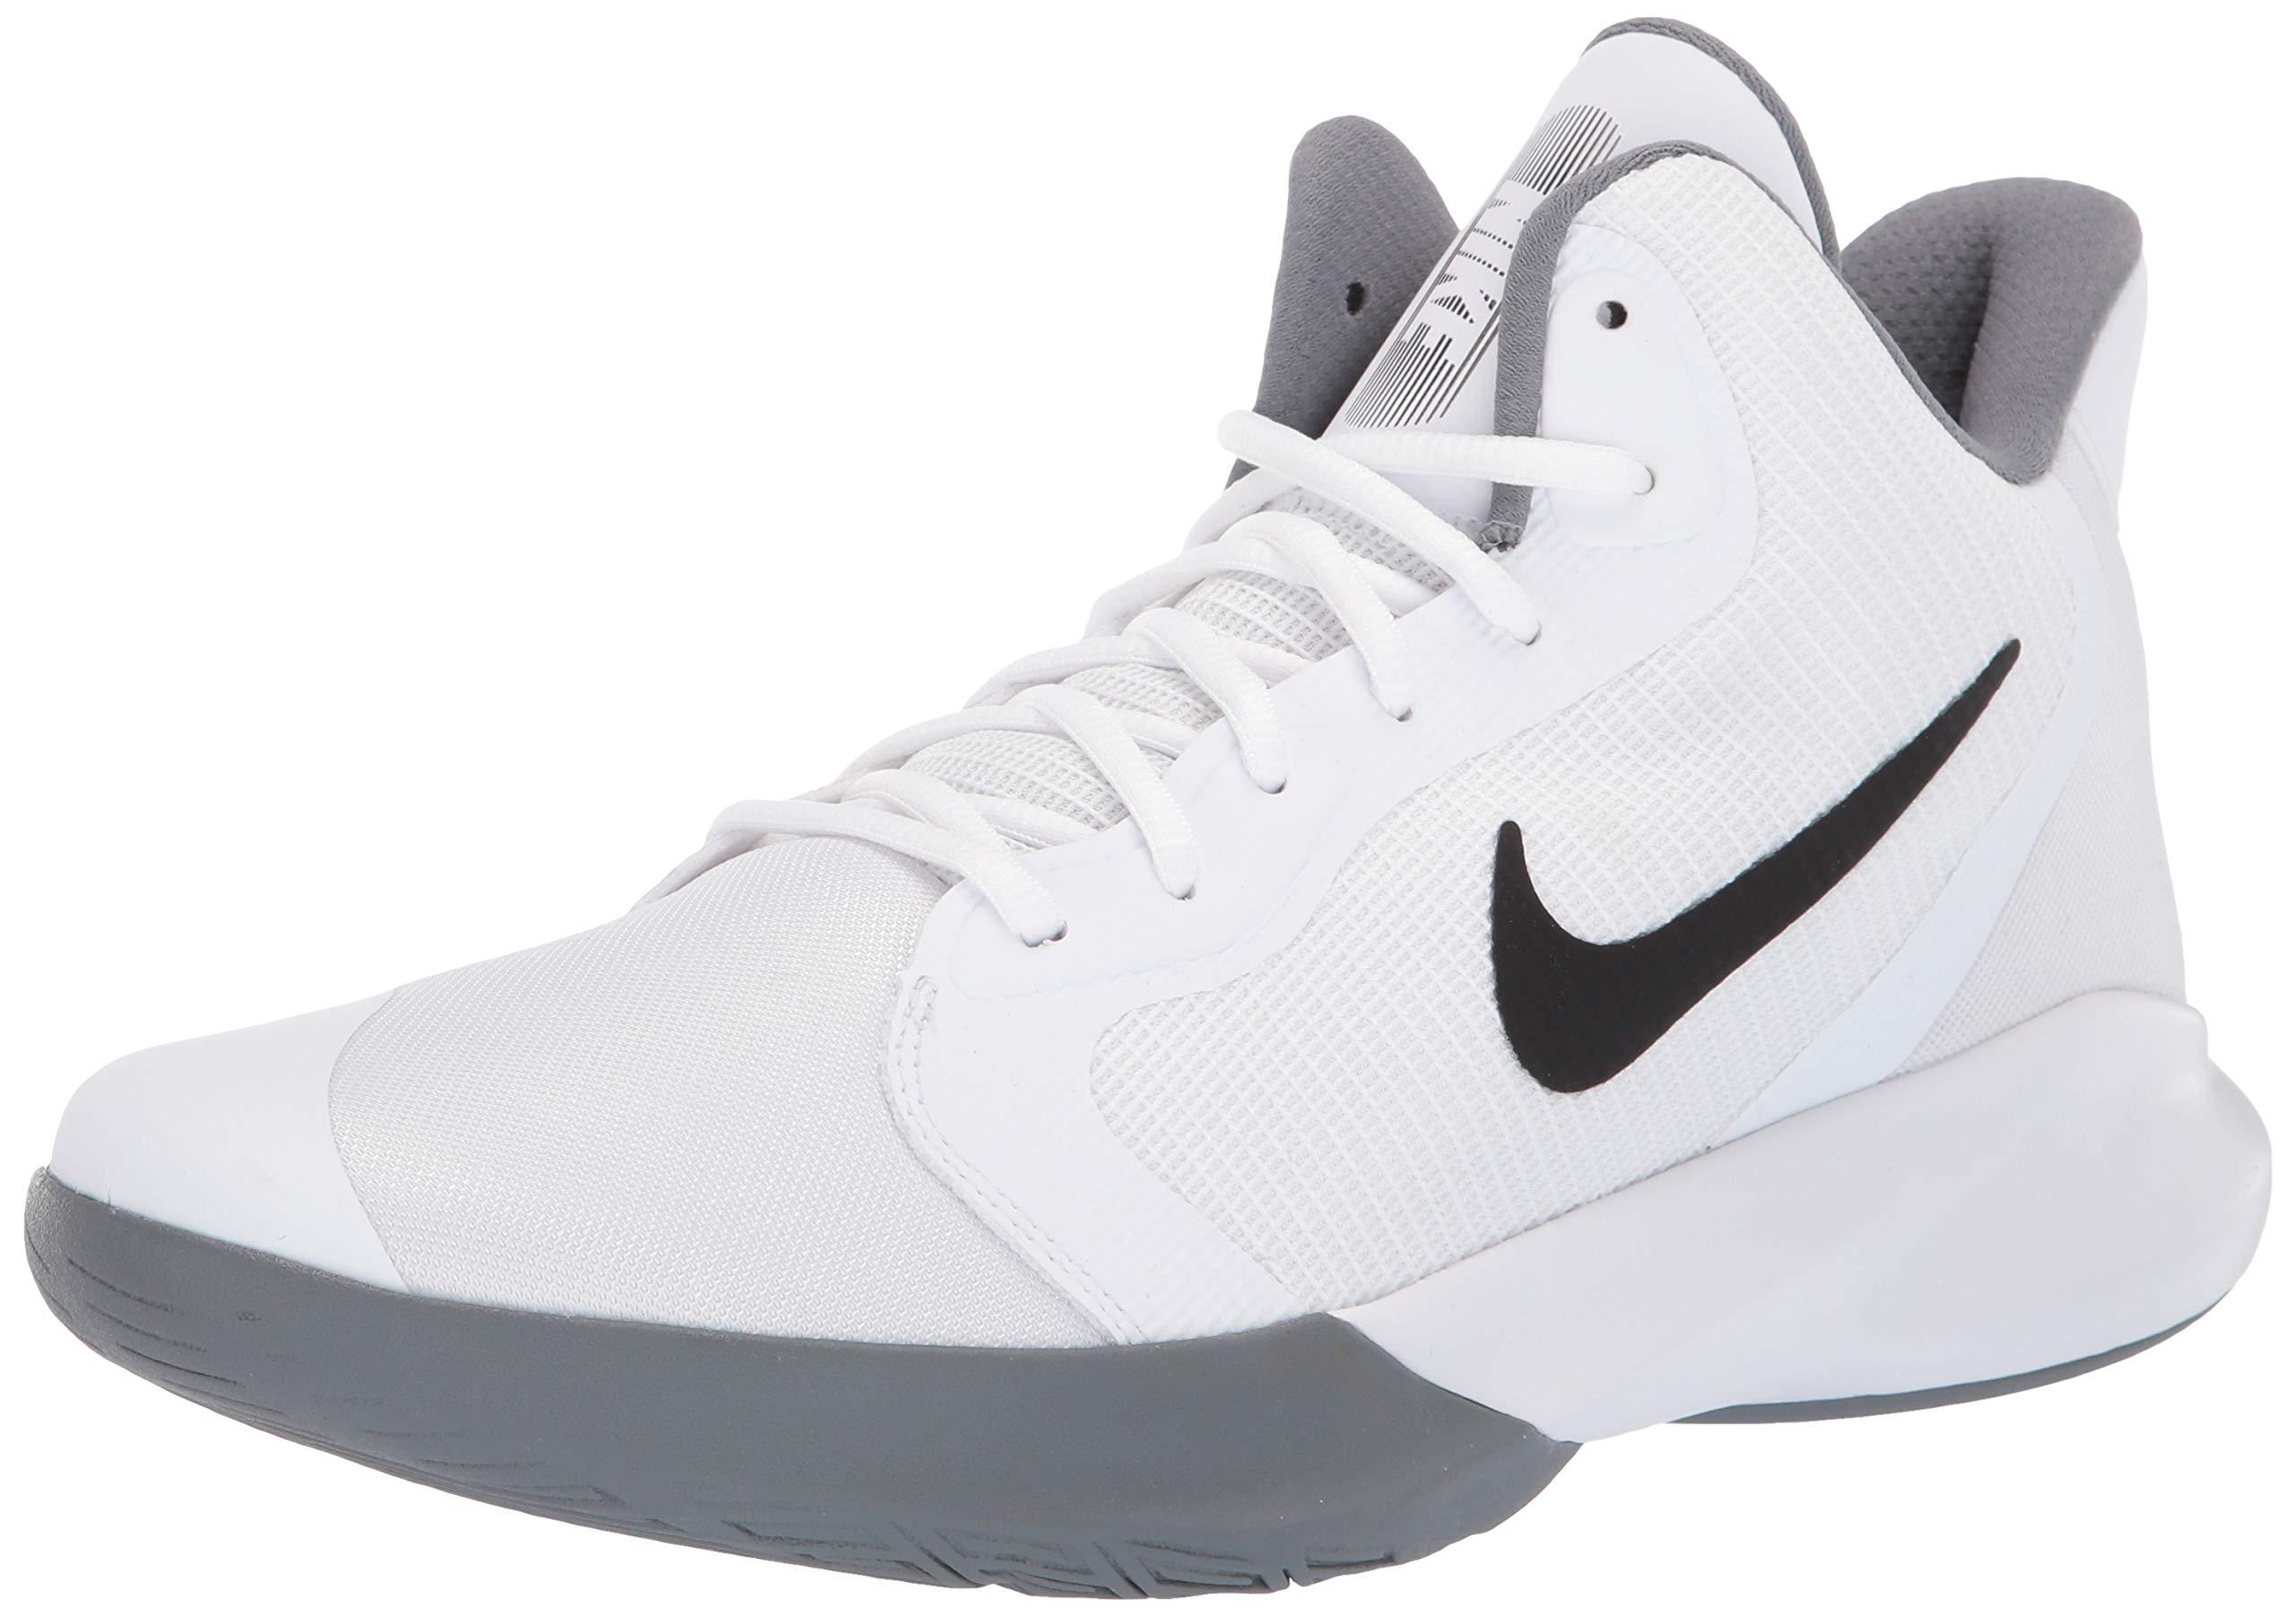 Nike Precision Iii Basketball Shoe in White/Black (White) - Save 43% | Lyst